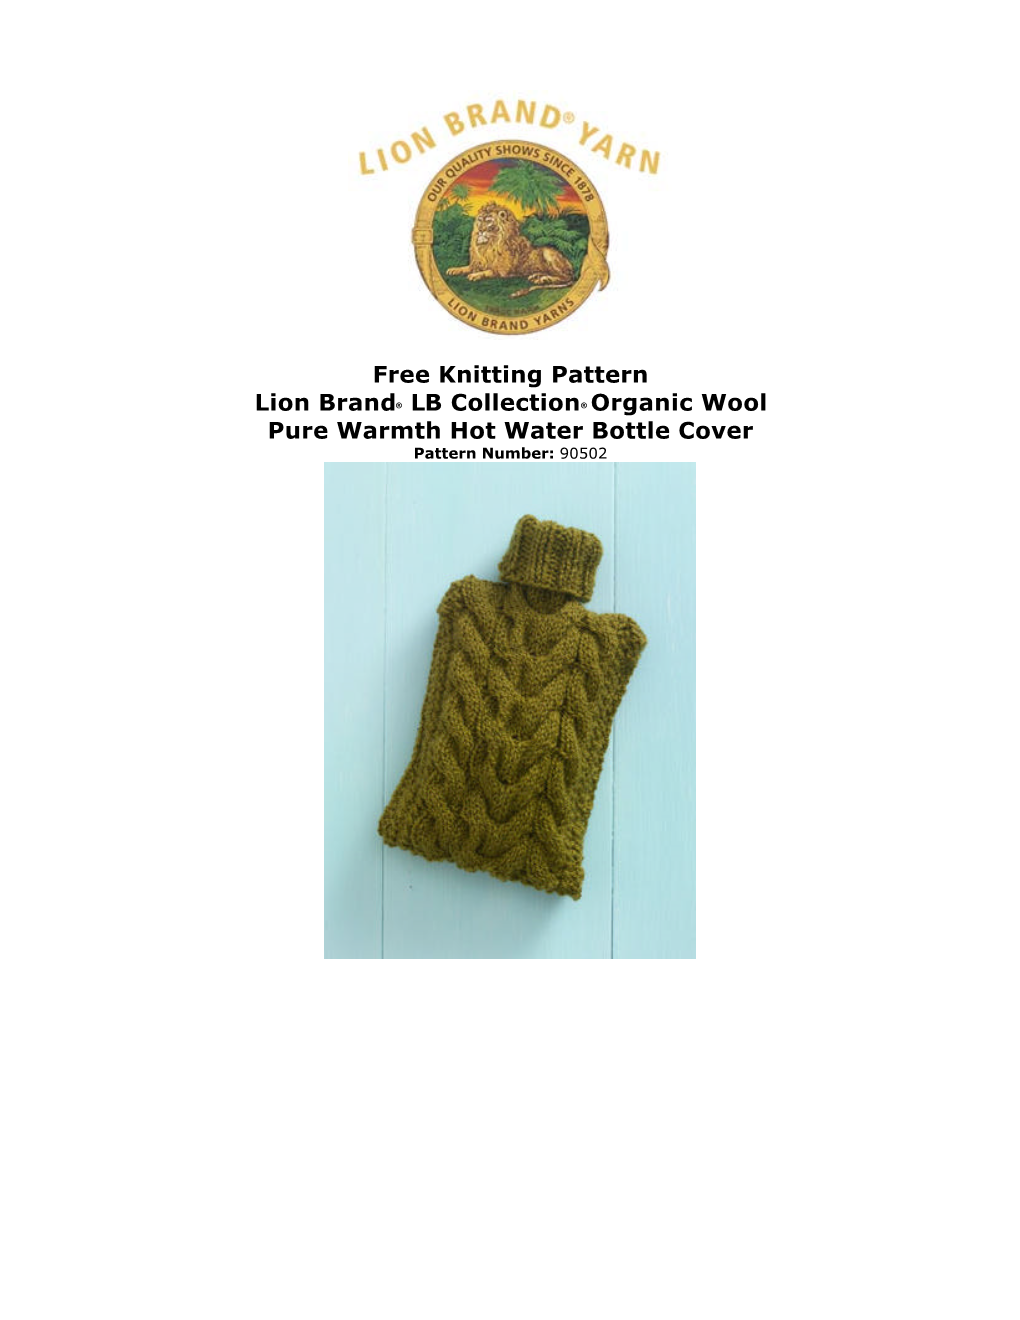 Free Knitting Pattern Lion Brand® LB Collection® Organic Wool Pure